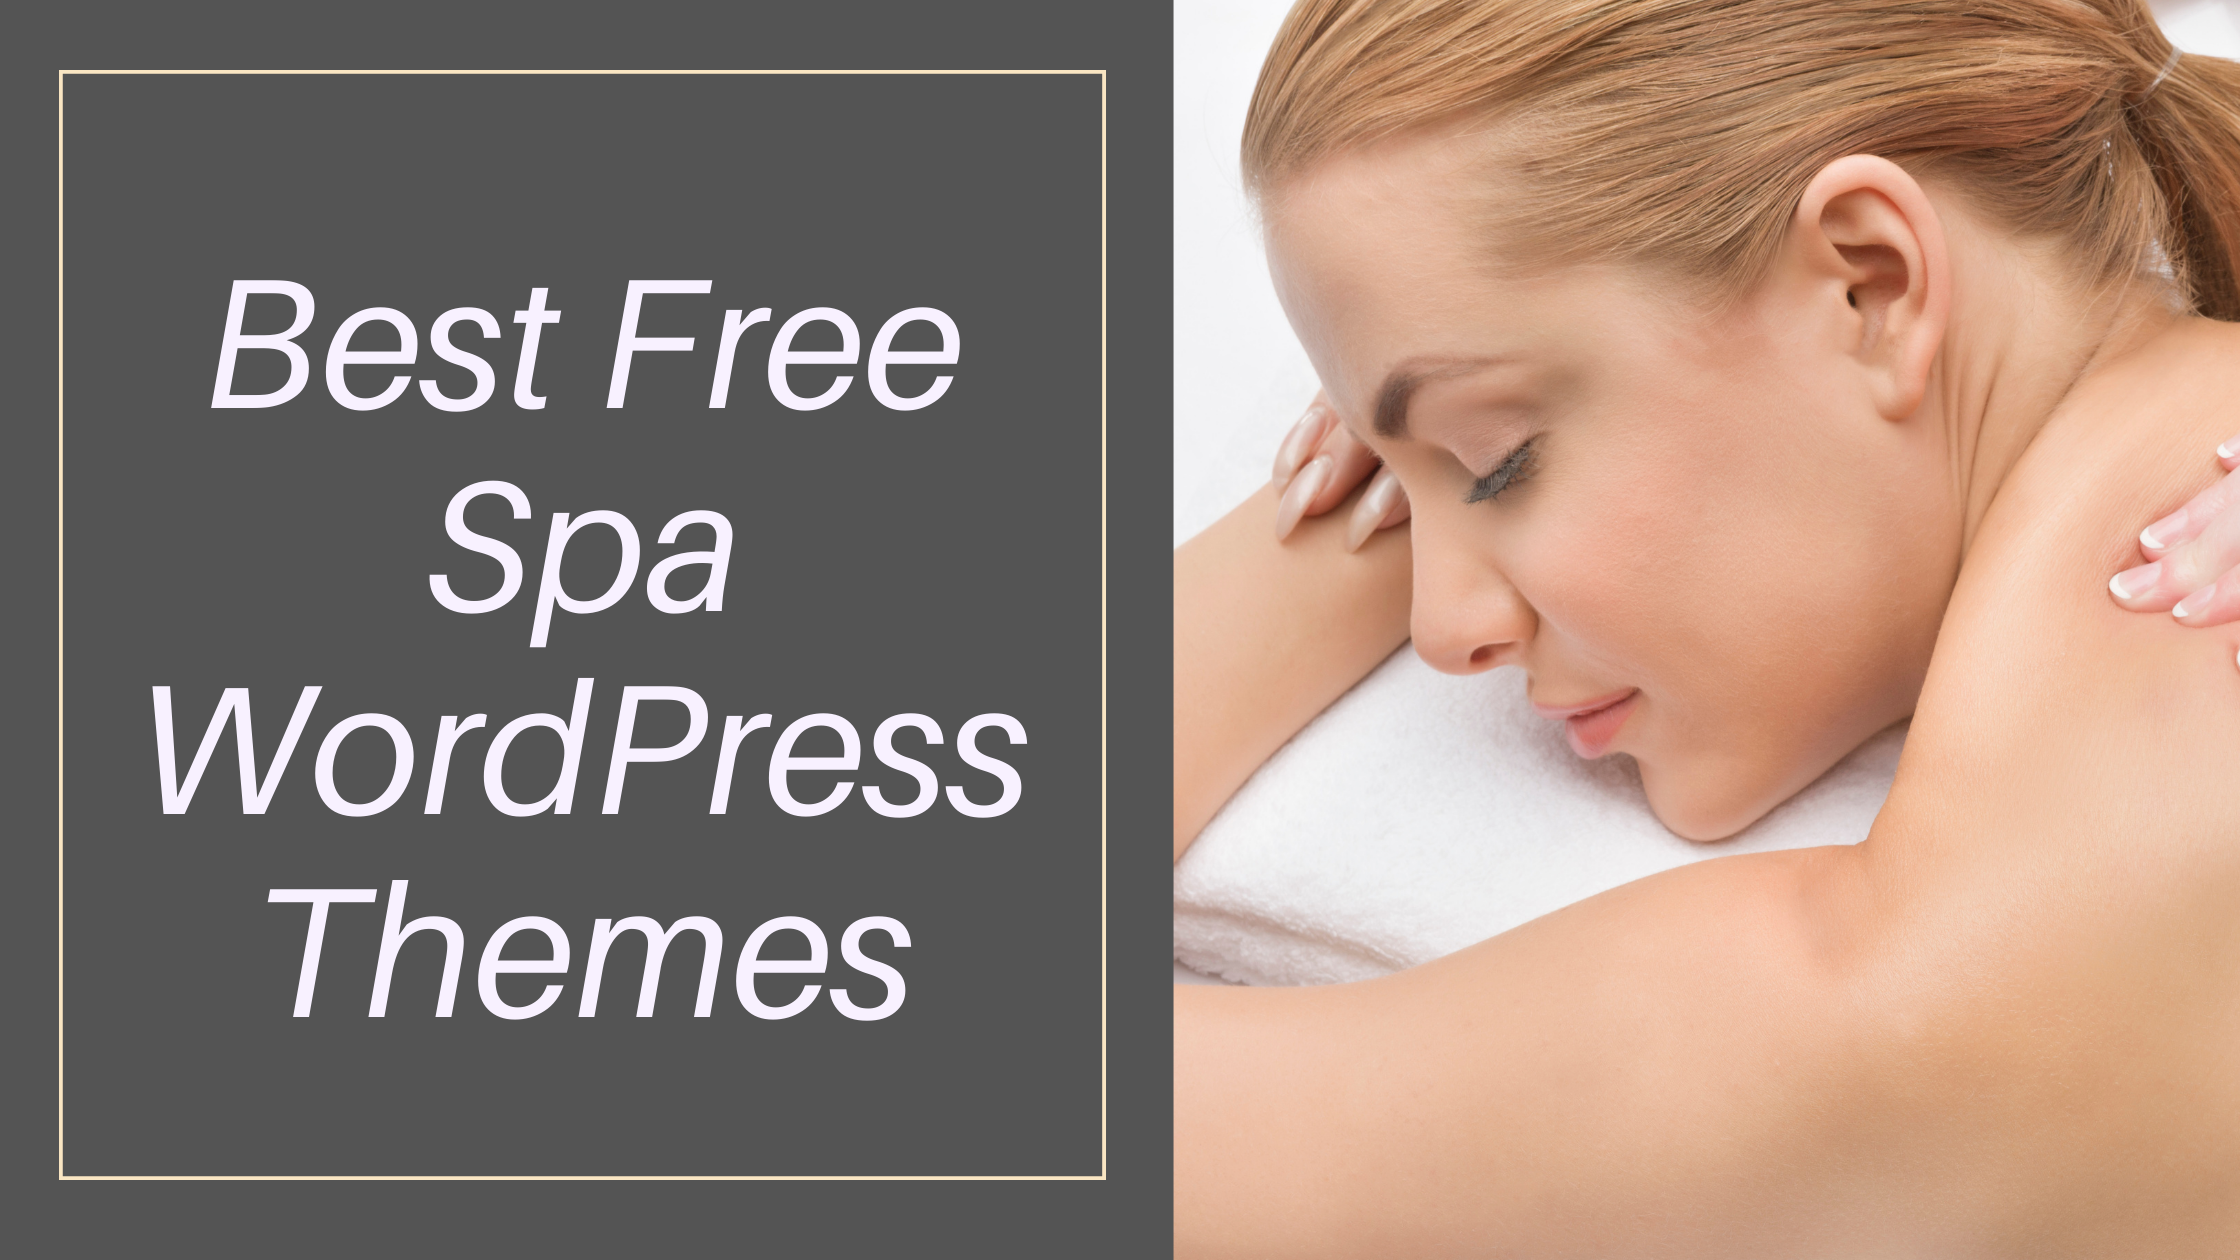 Best Free Spa WordPress themes